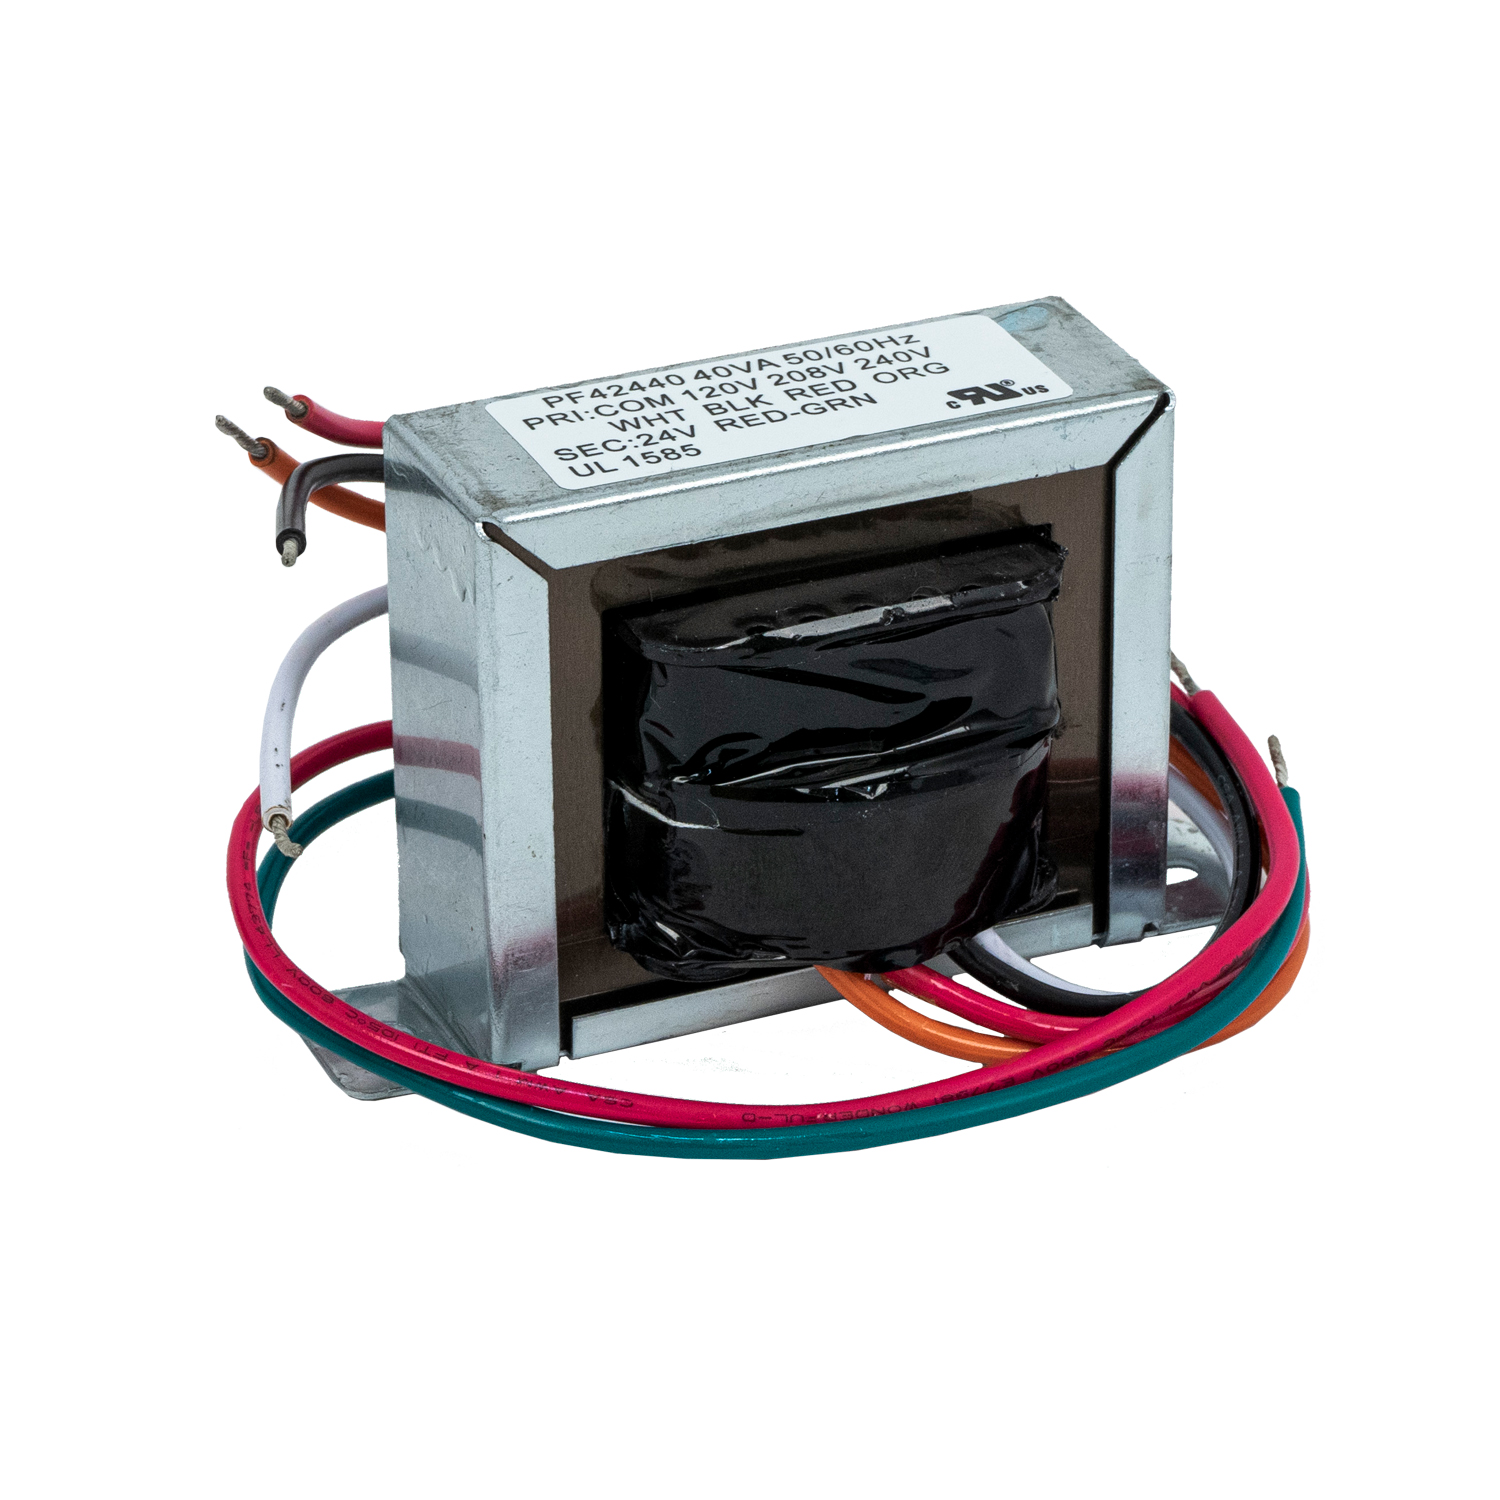 JARD HVAC Magnetic Transformer Class 2 for sale online 